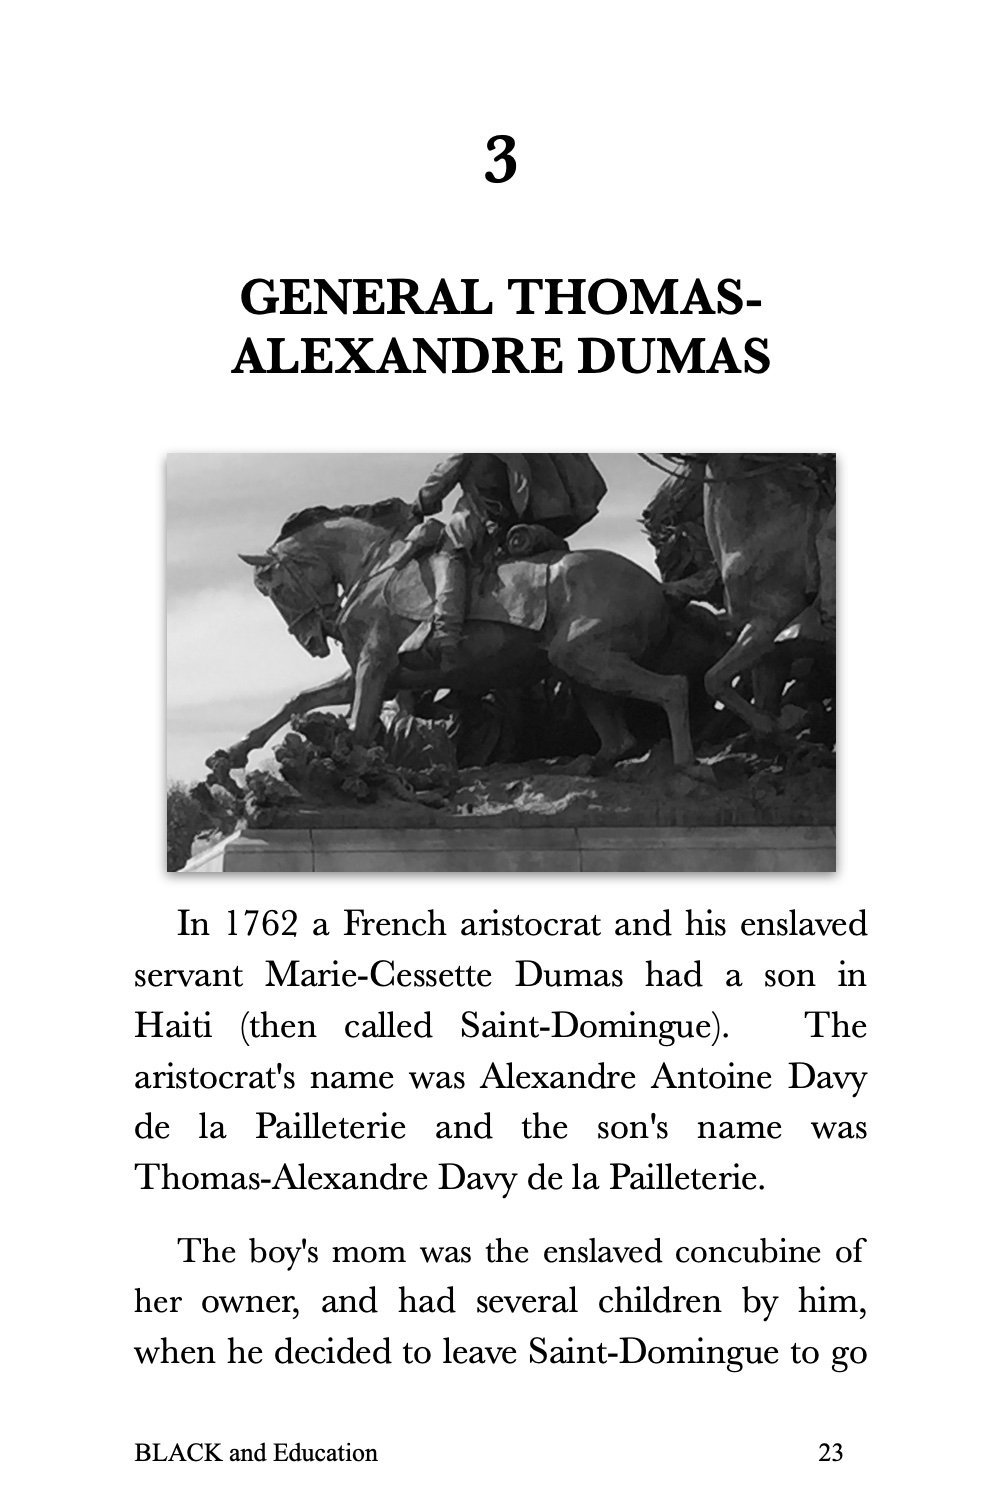 Stories about Black History Vol 3 - General Thomas Alexandre Dumas.jpg